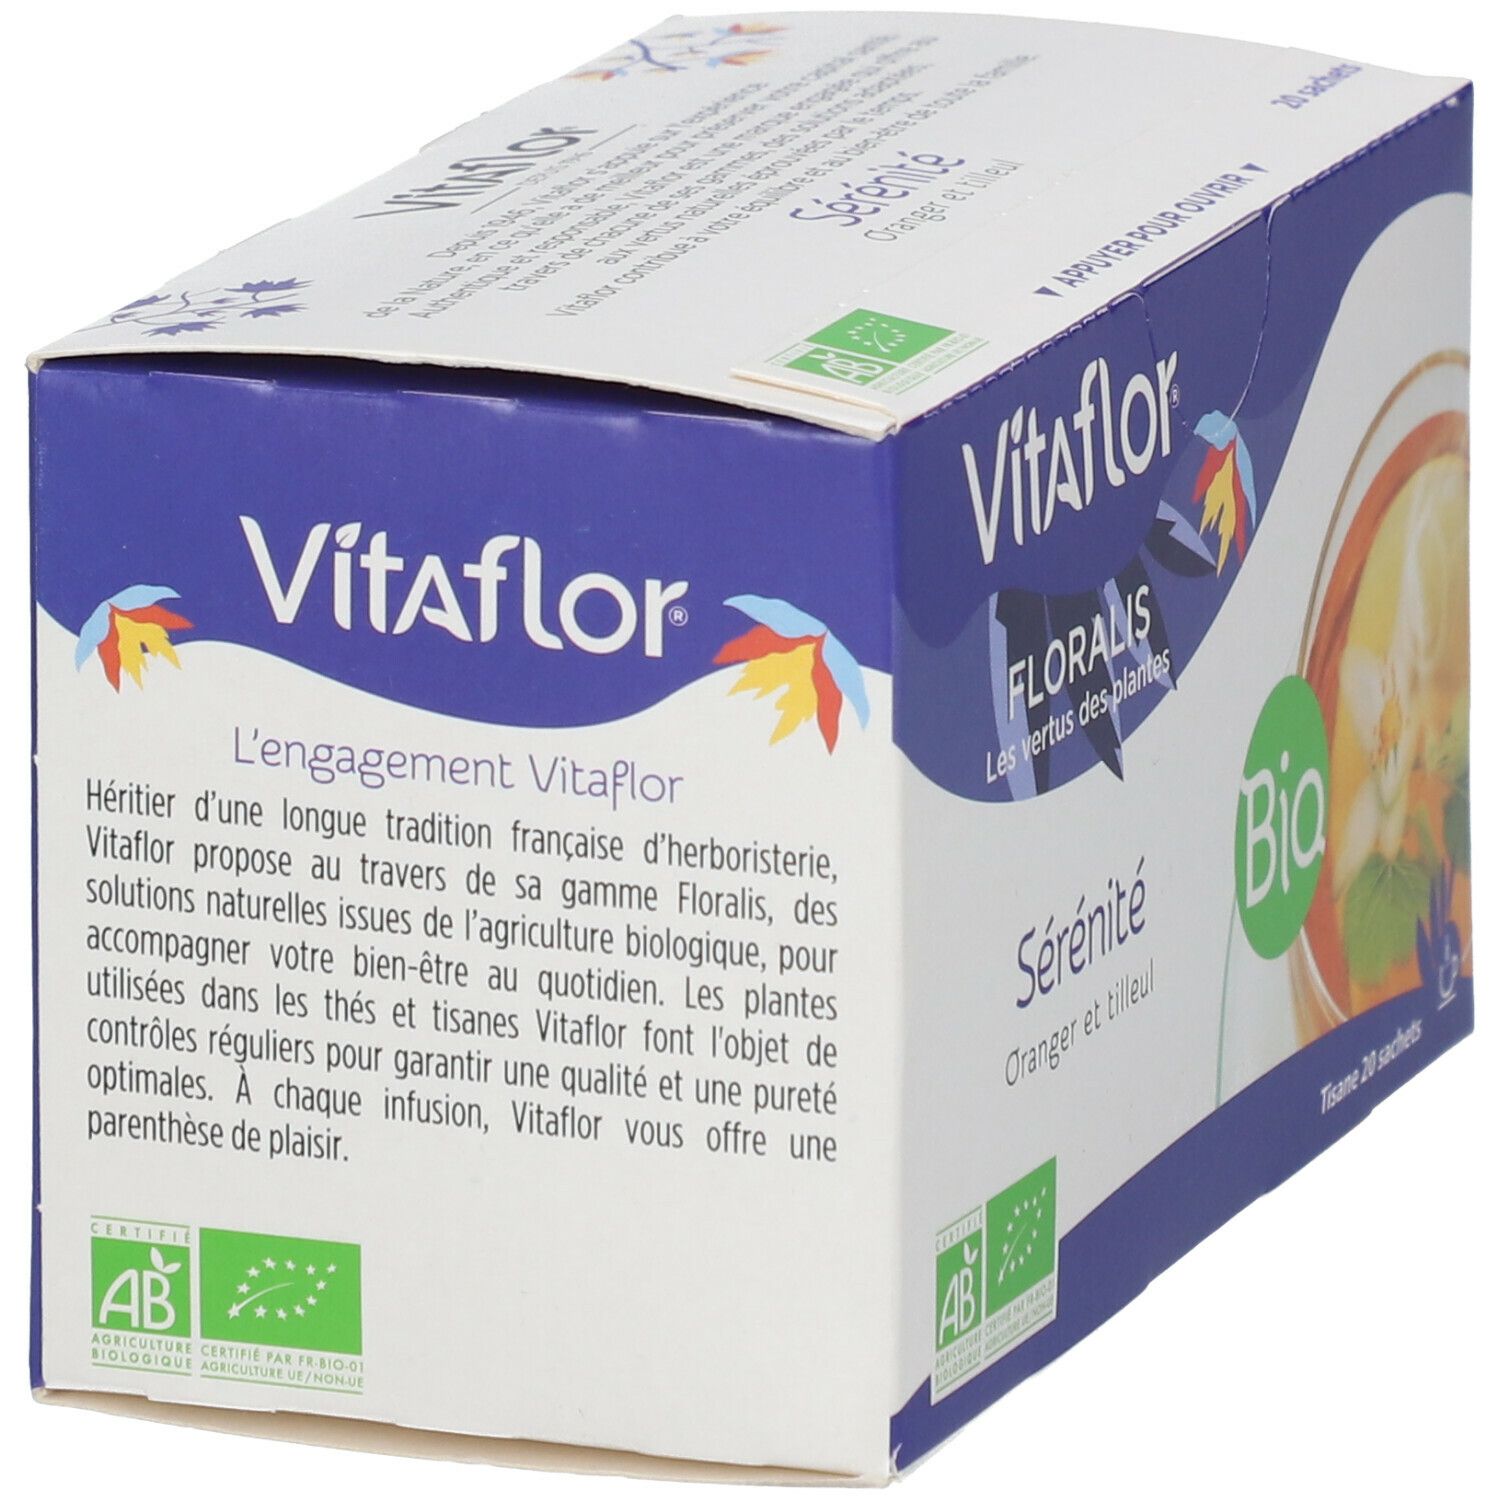 Vitaflor Bio Tisane sérénité